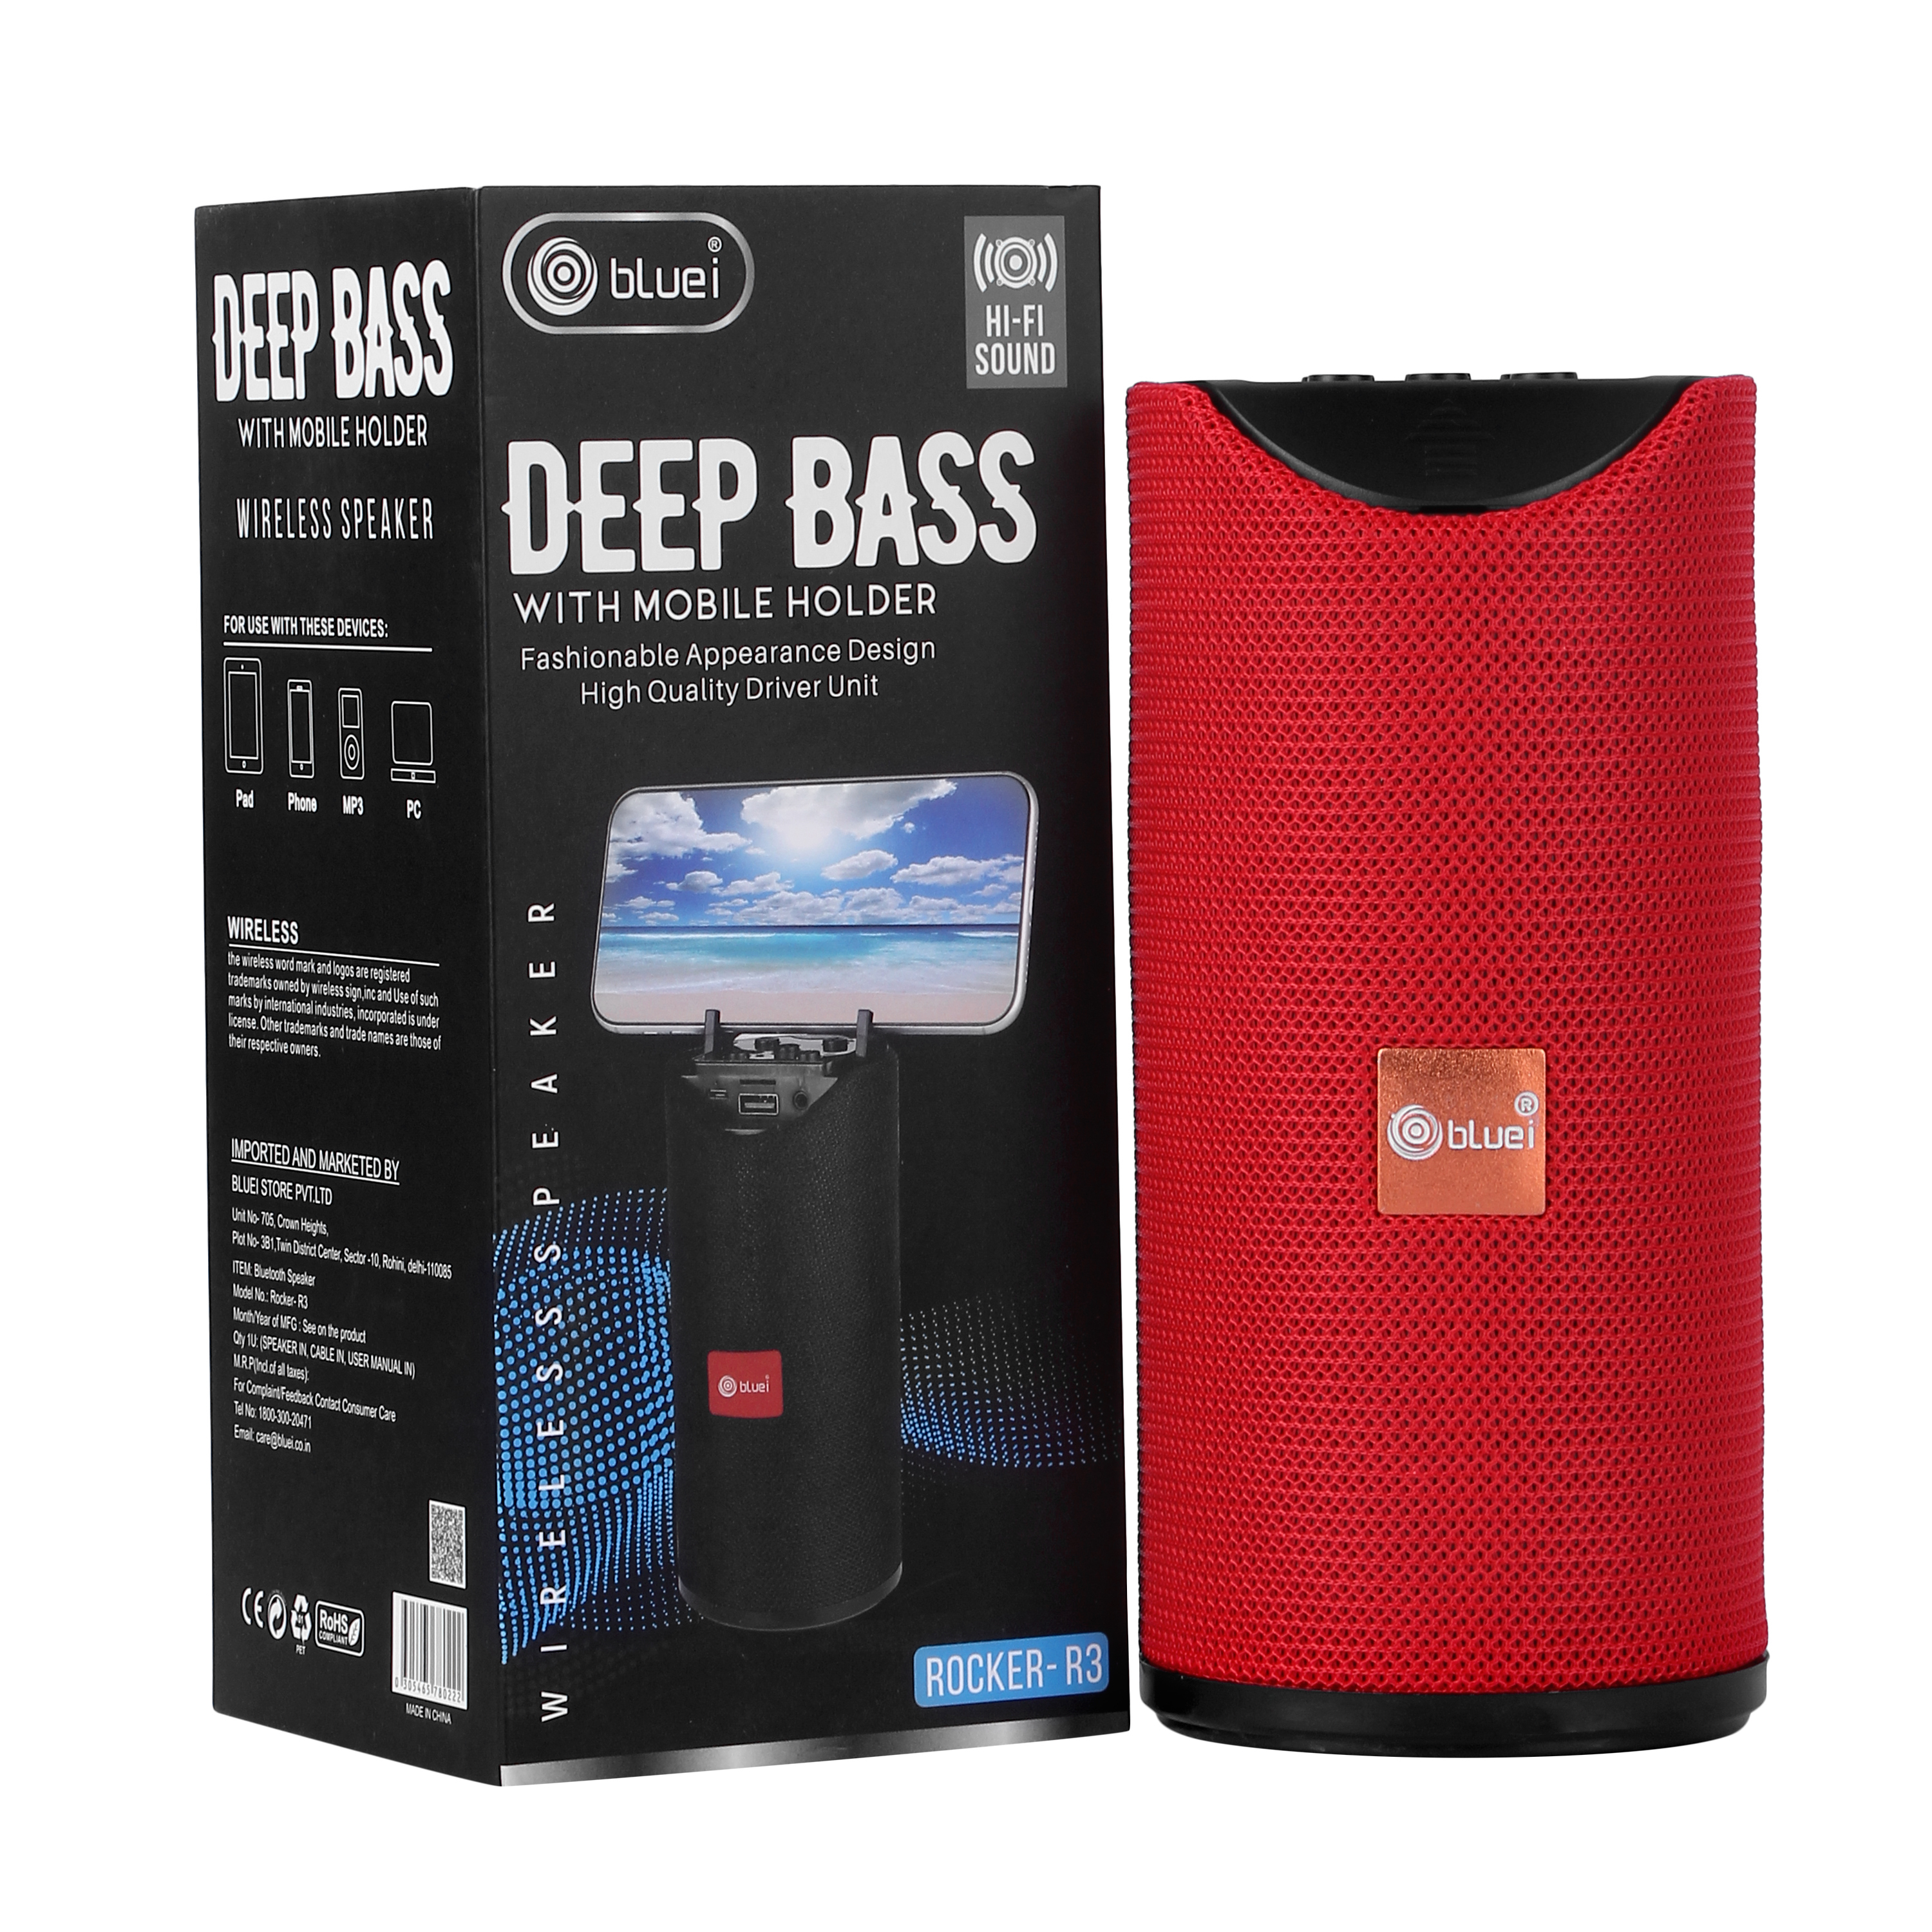 Bluei Rocker R3 Deep Bass Wireless Bluetooth Speaker with Mobile Stand